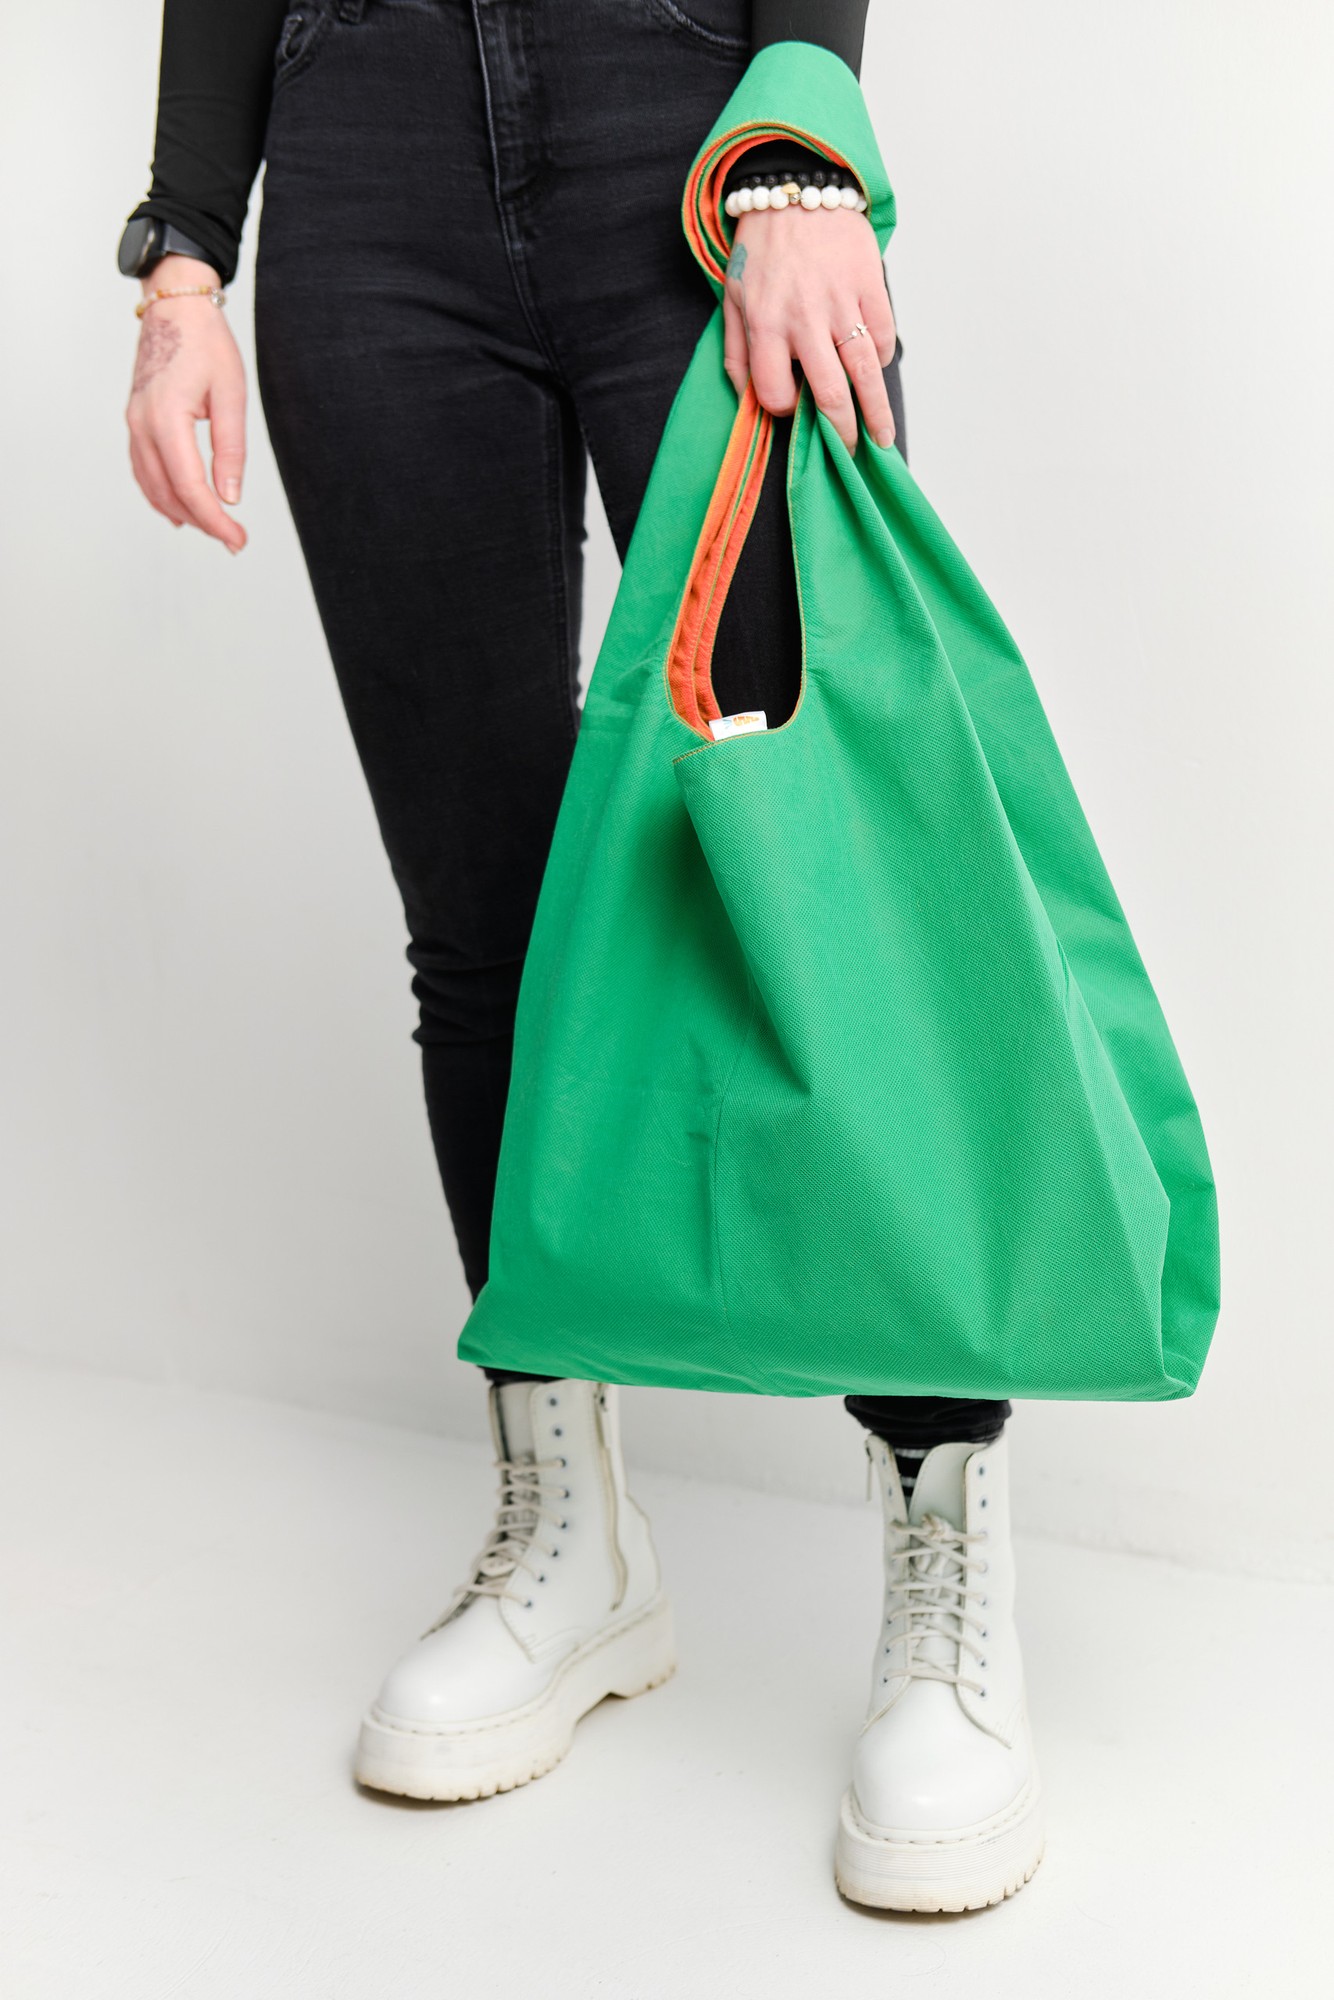 Large shopper for shopping "Rick", beach bag, eco bag, handmade